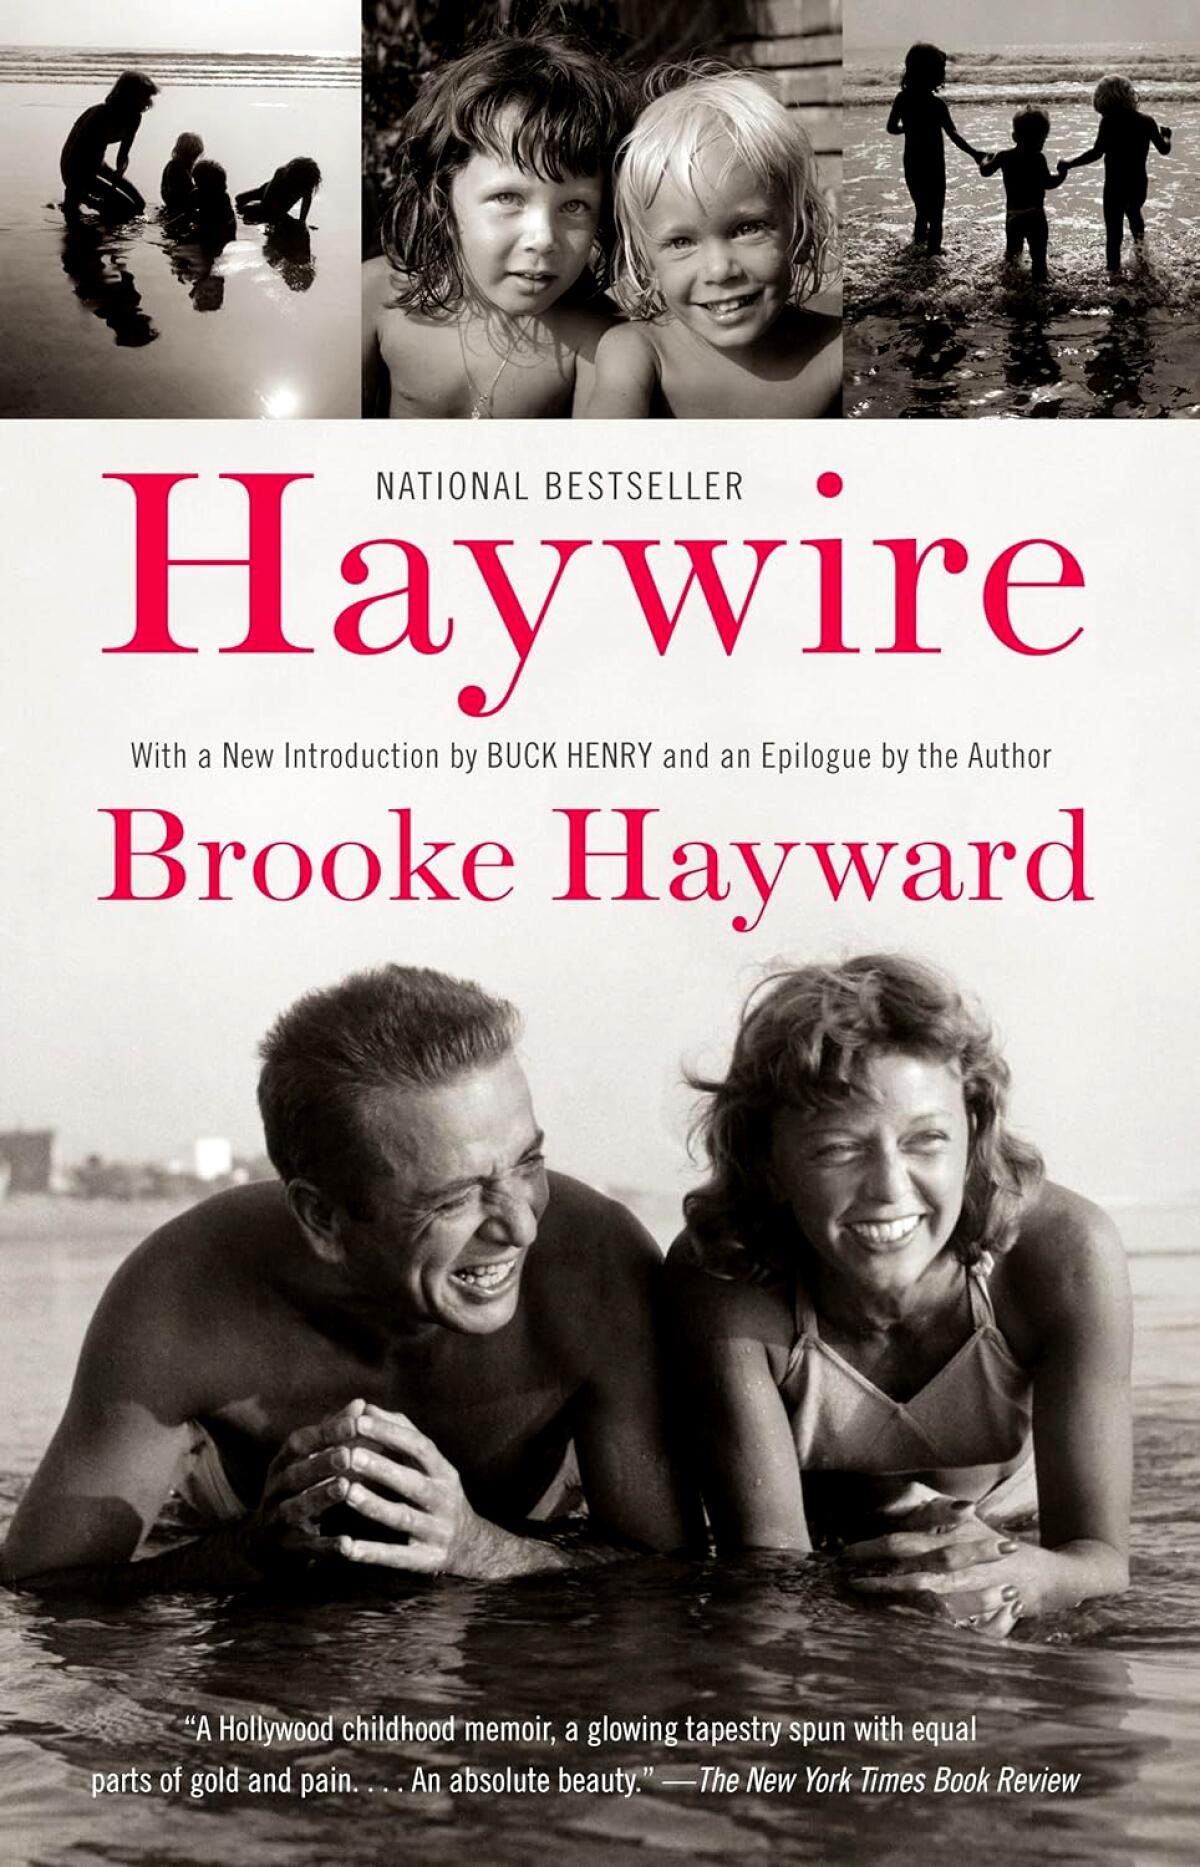 "Haywire" by Brooke Hayward, 1977